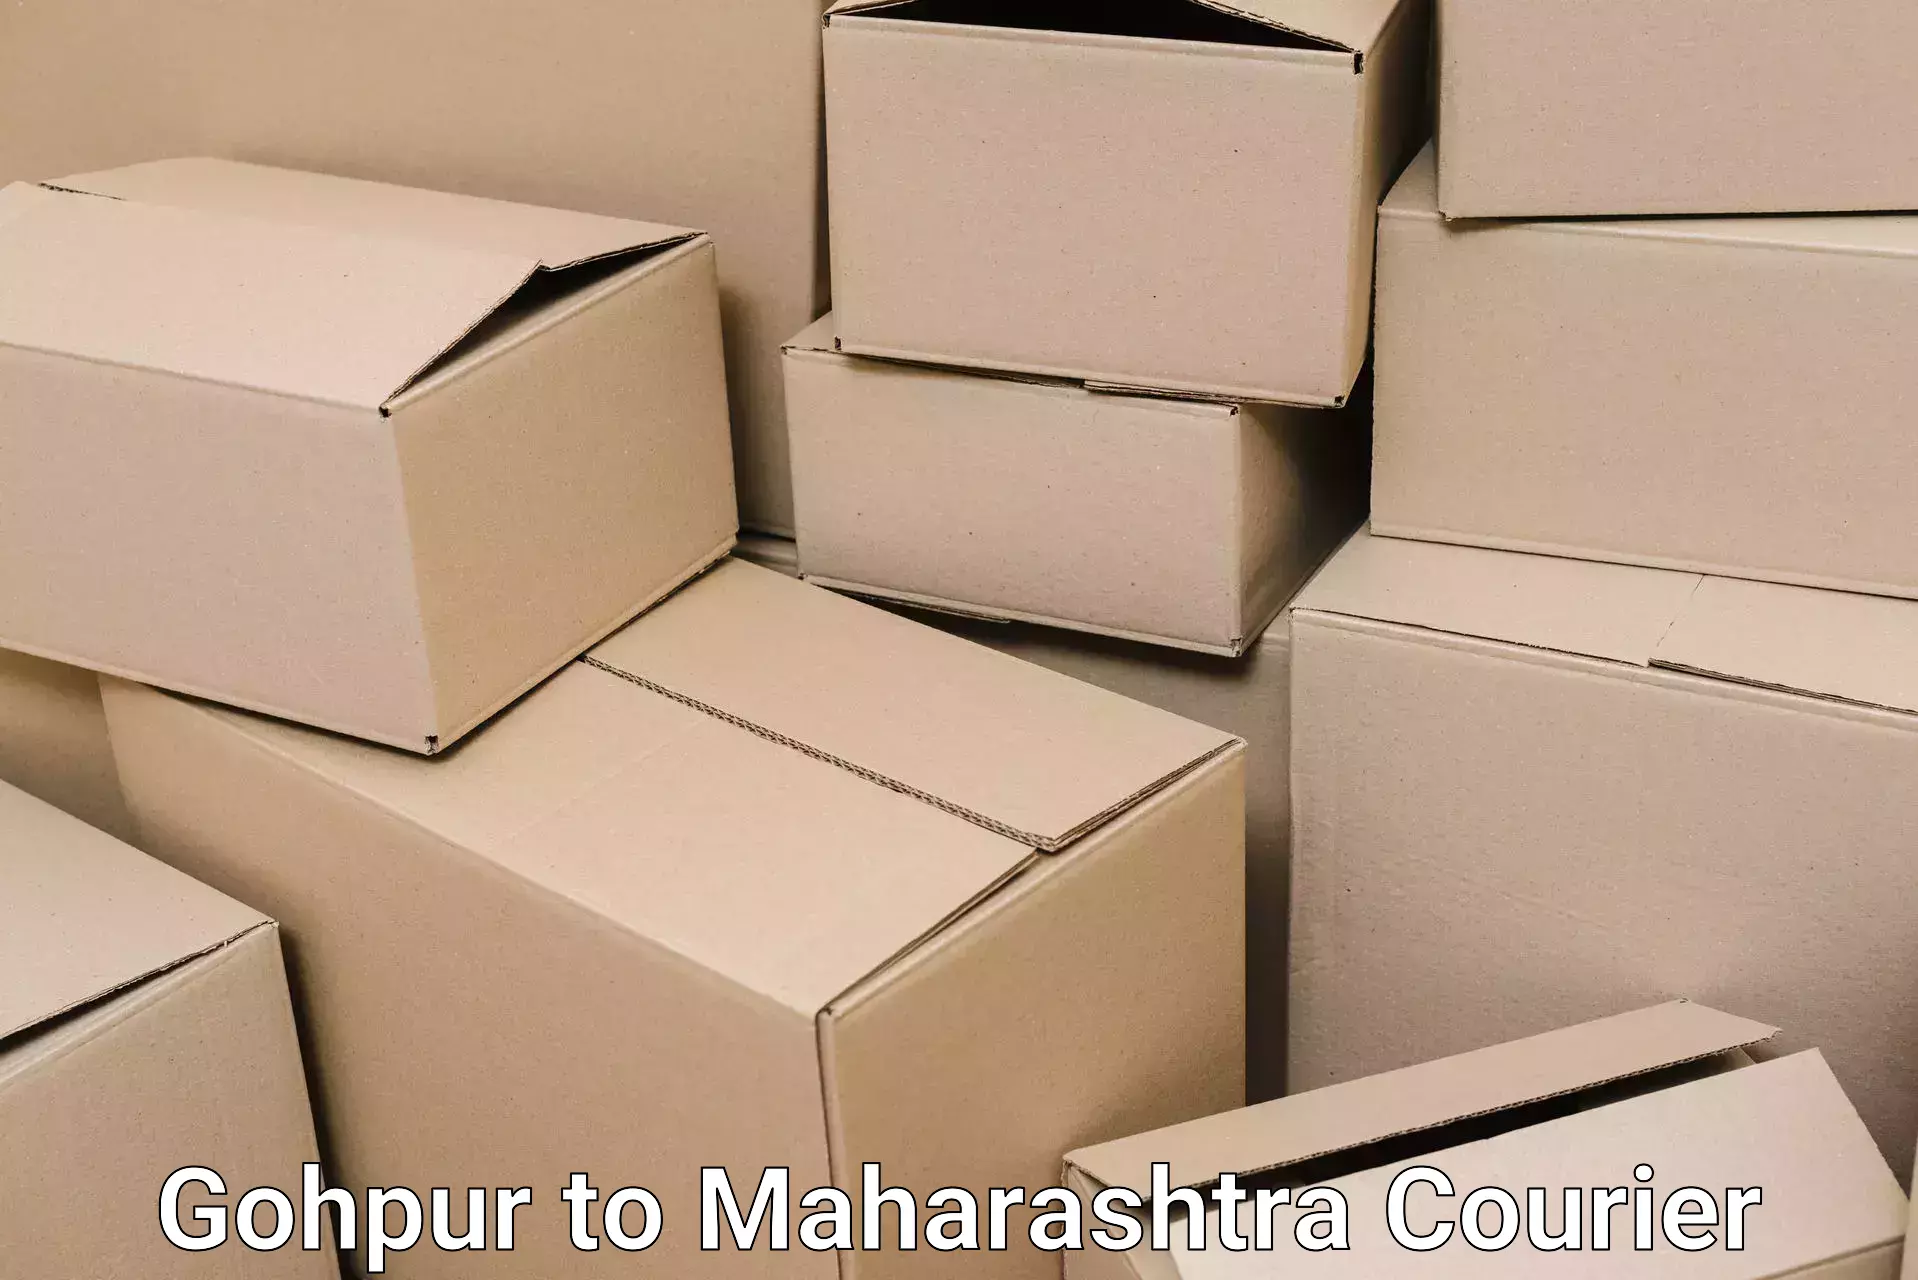 Home goods moving company Gohpur to Maharashtra